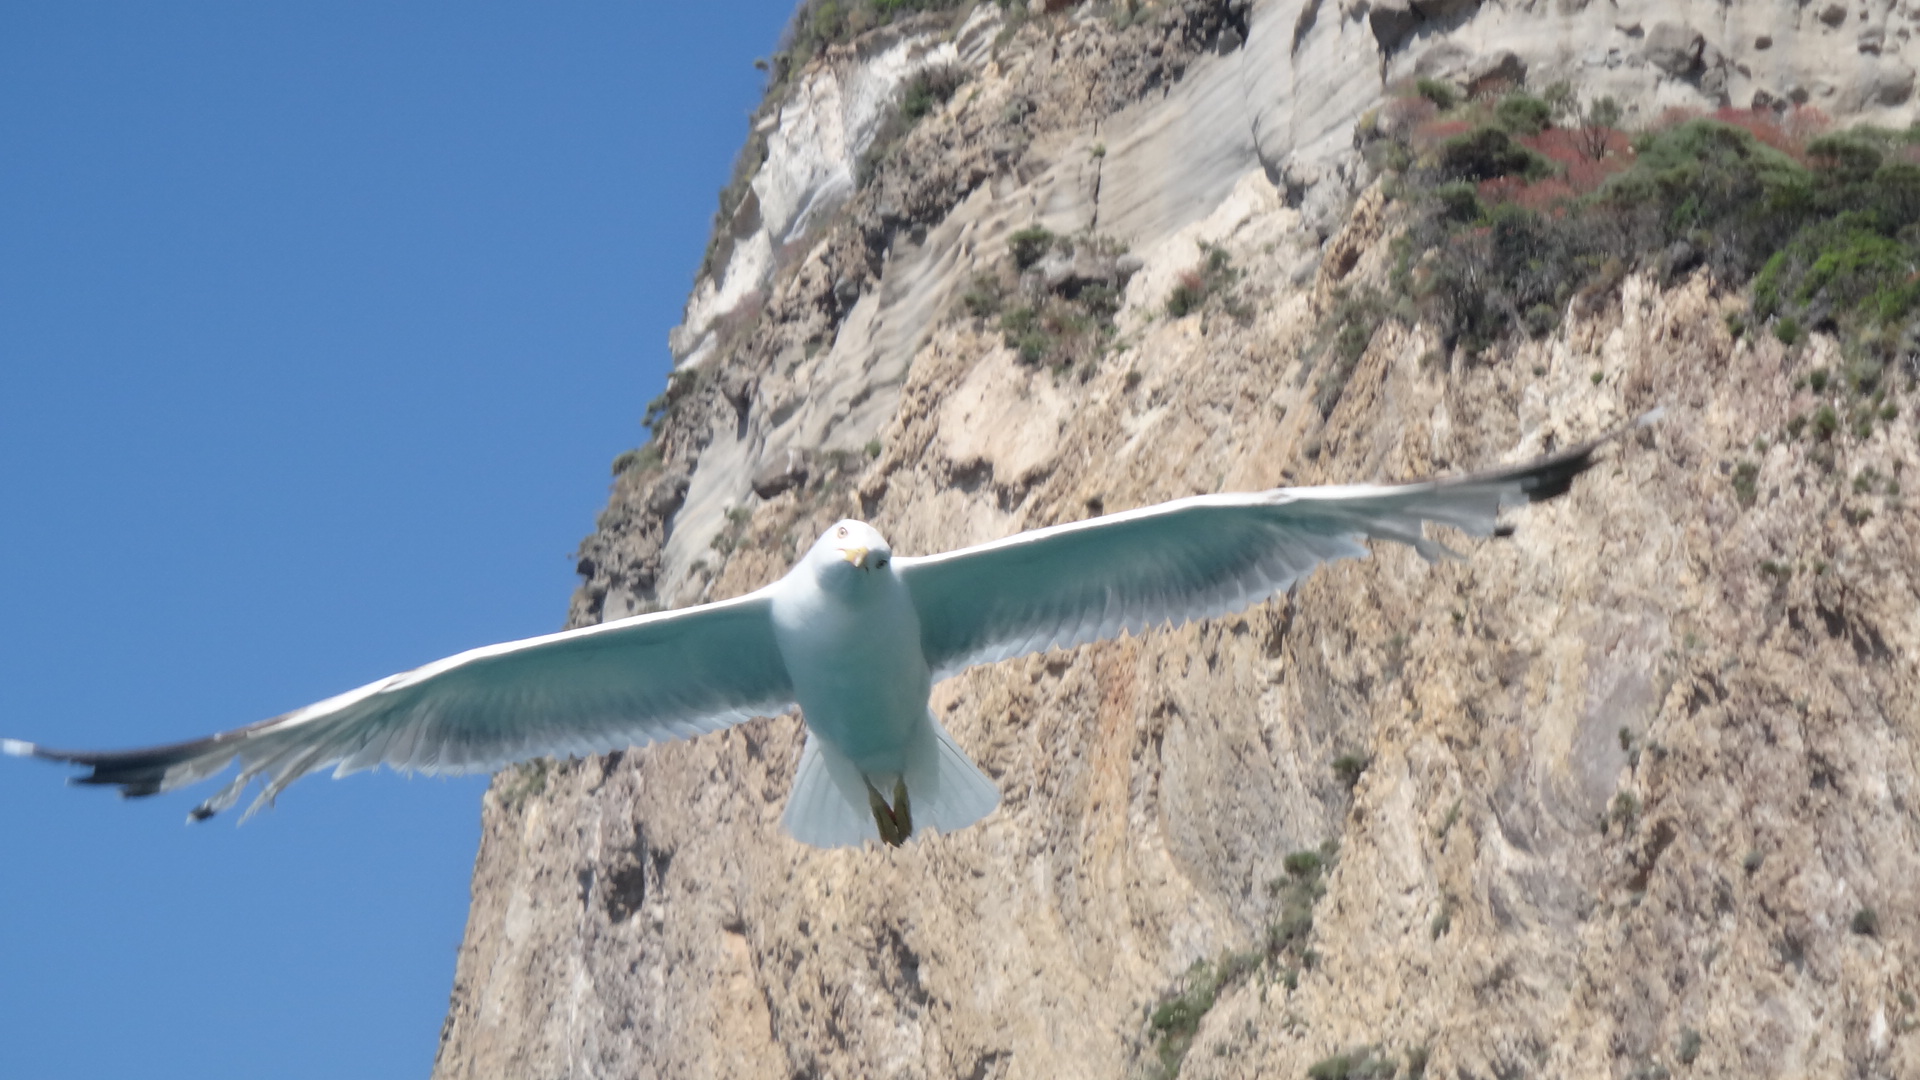 Seagull in flight I...